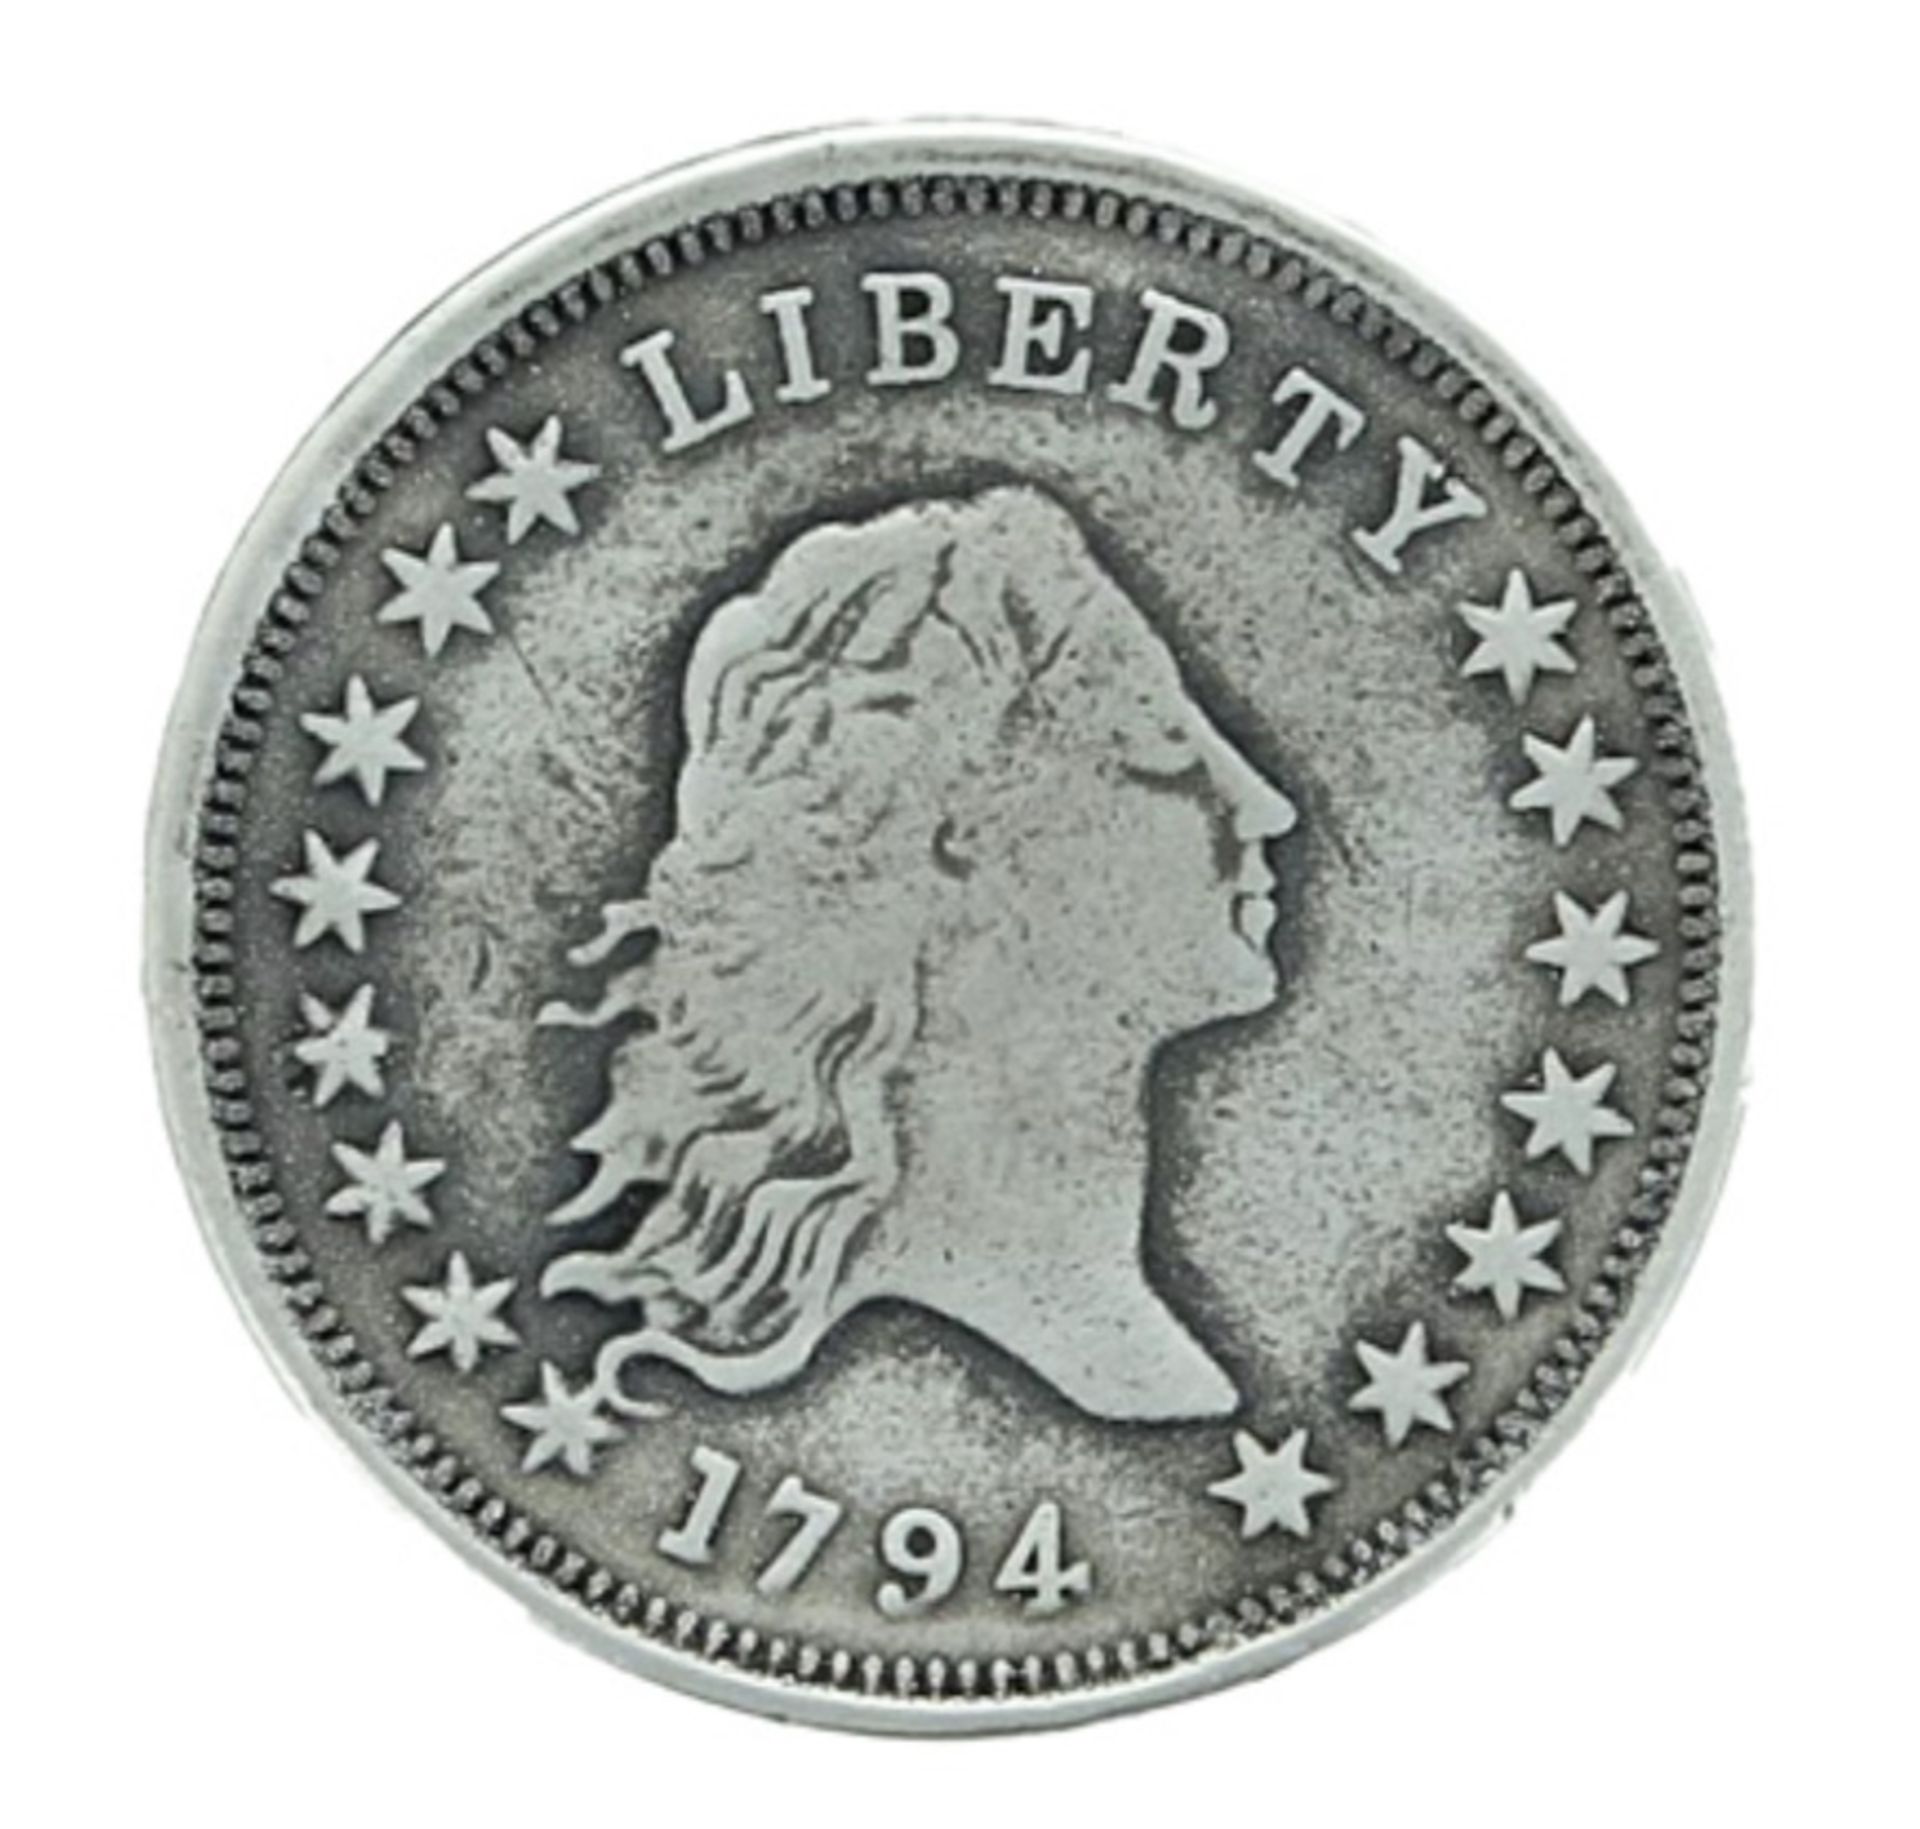 Flowing Hair Half Dollar "1794" Coin